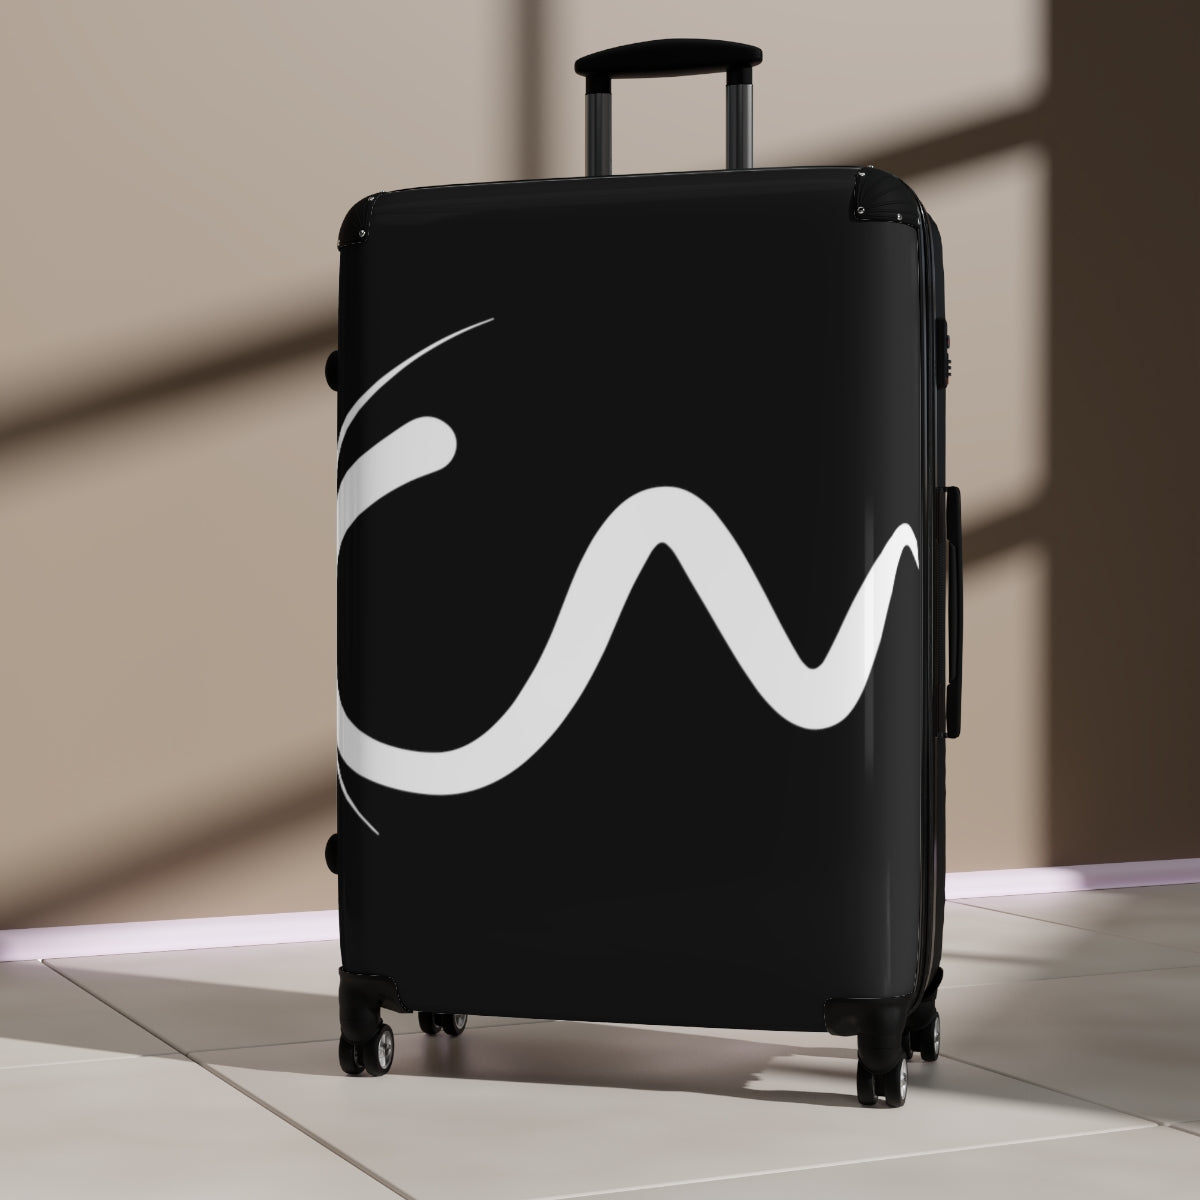 ccm Suitcase